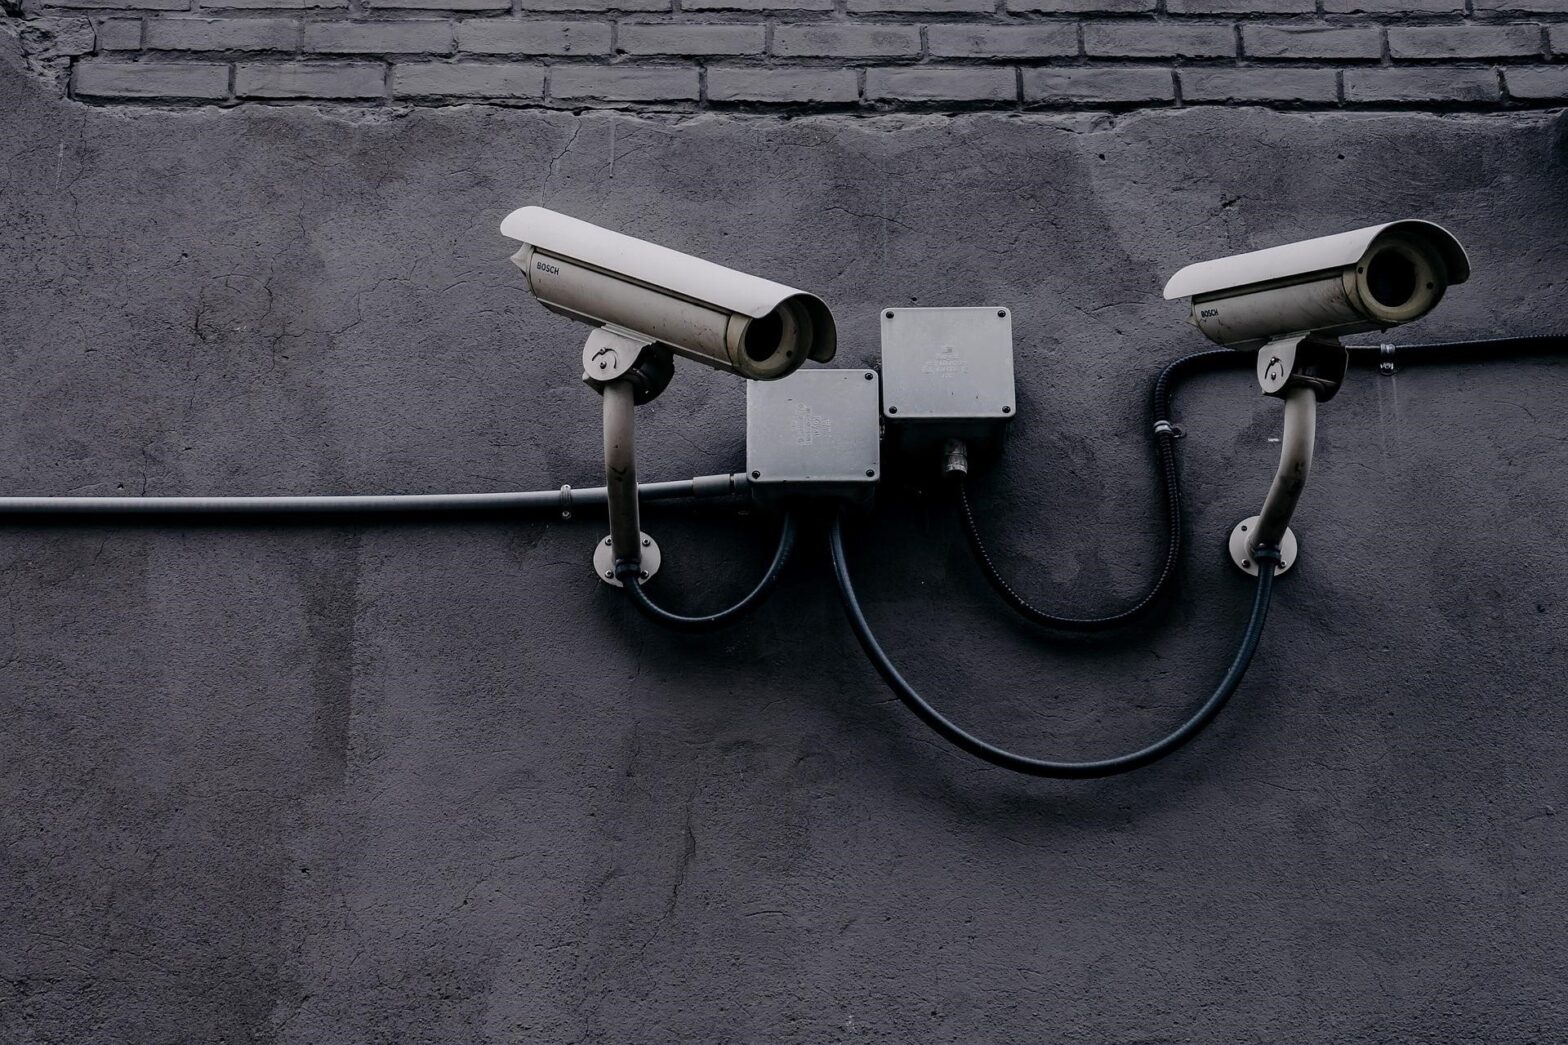 CCTV installation companies in UAE